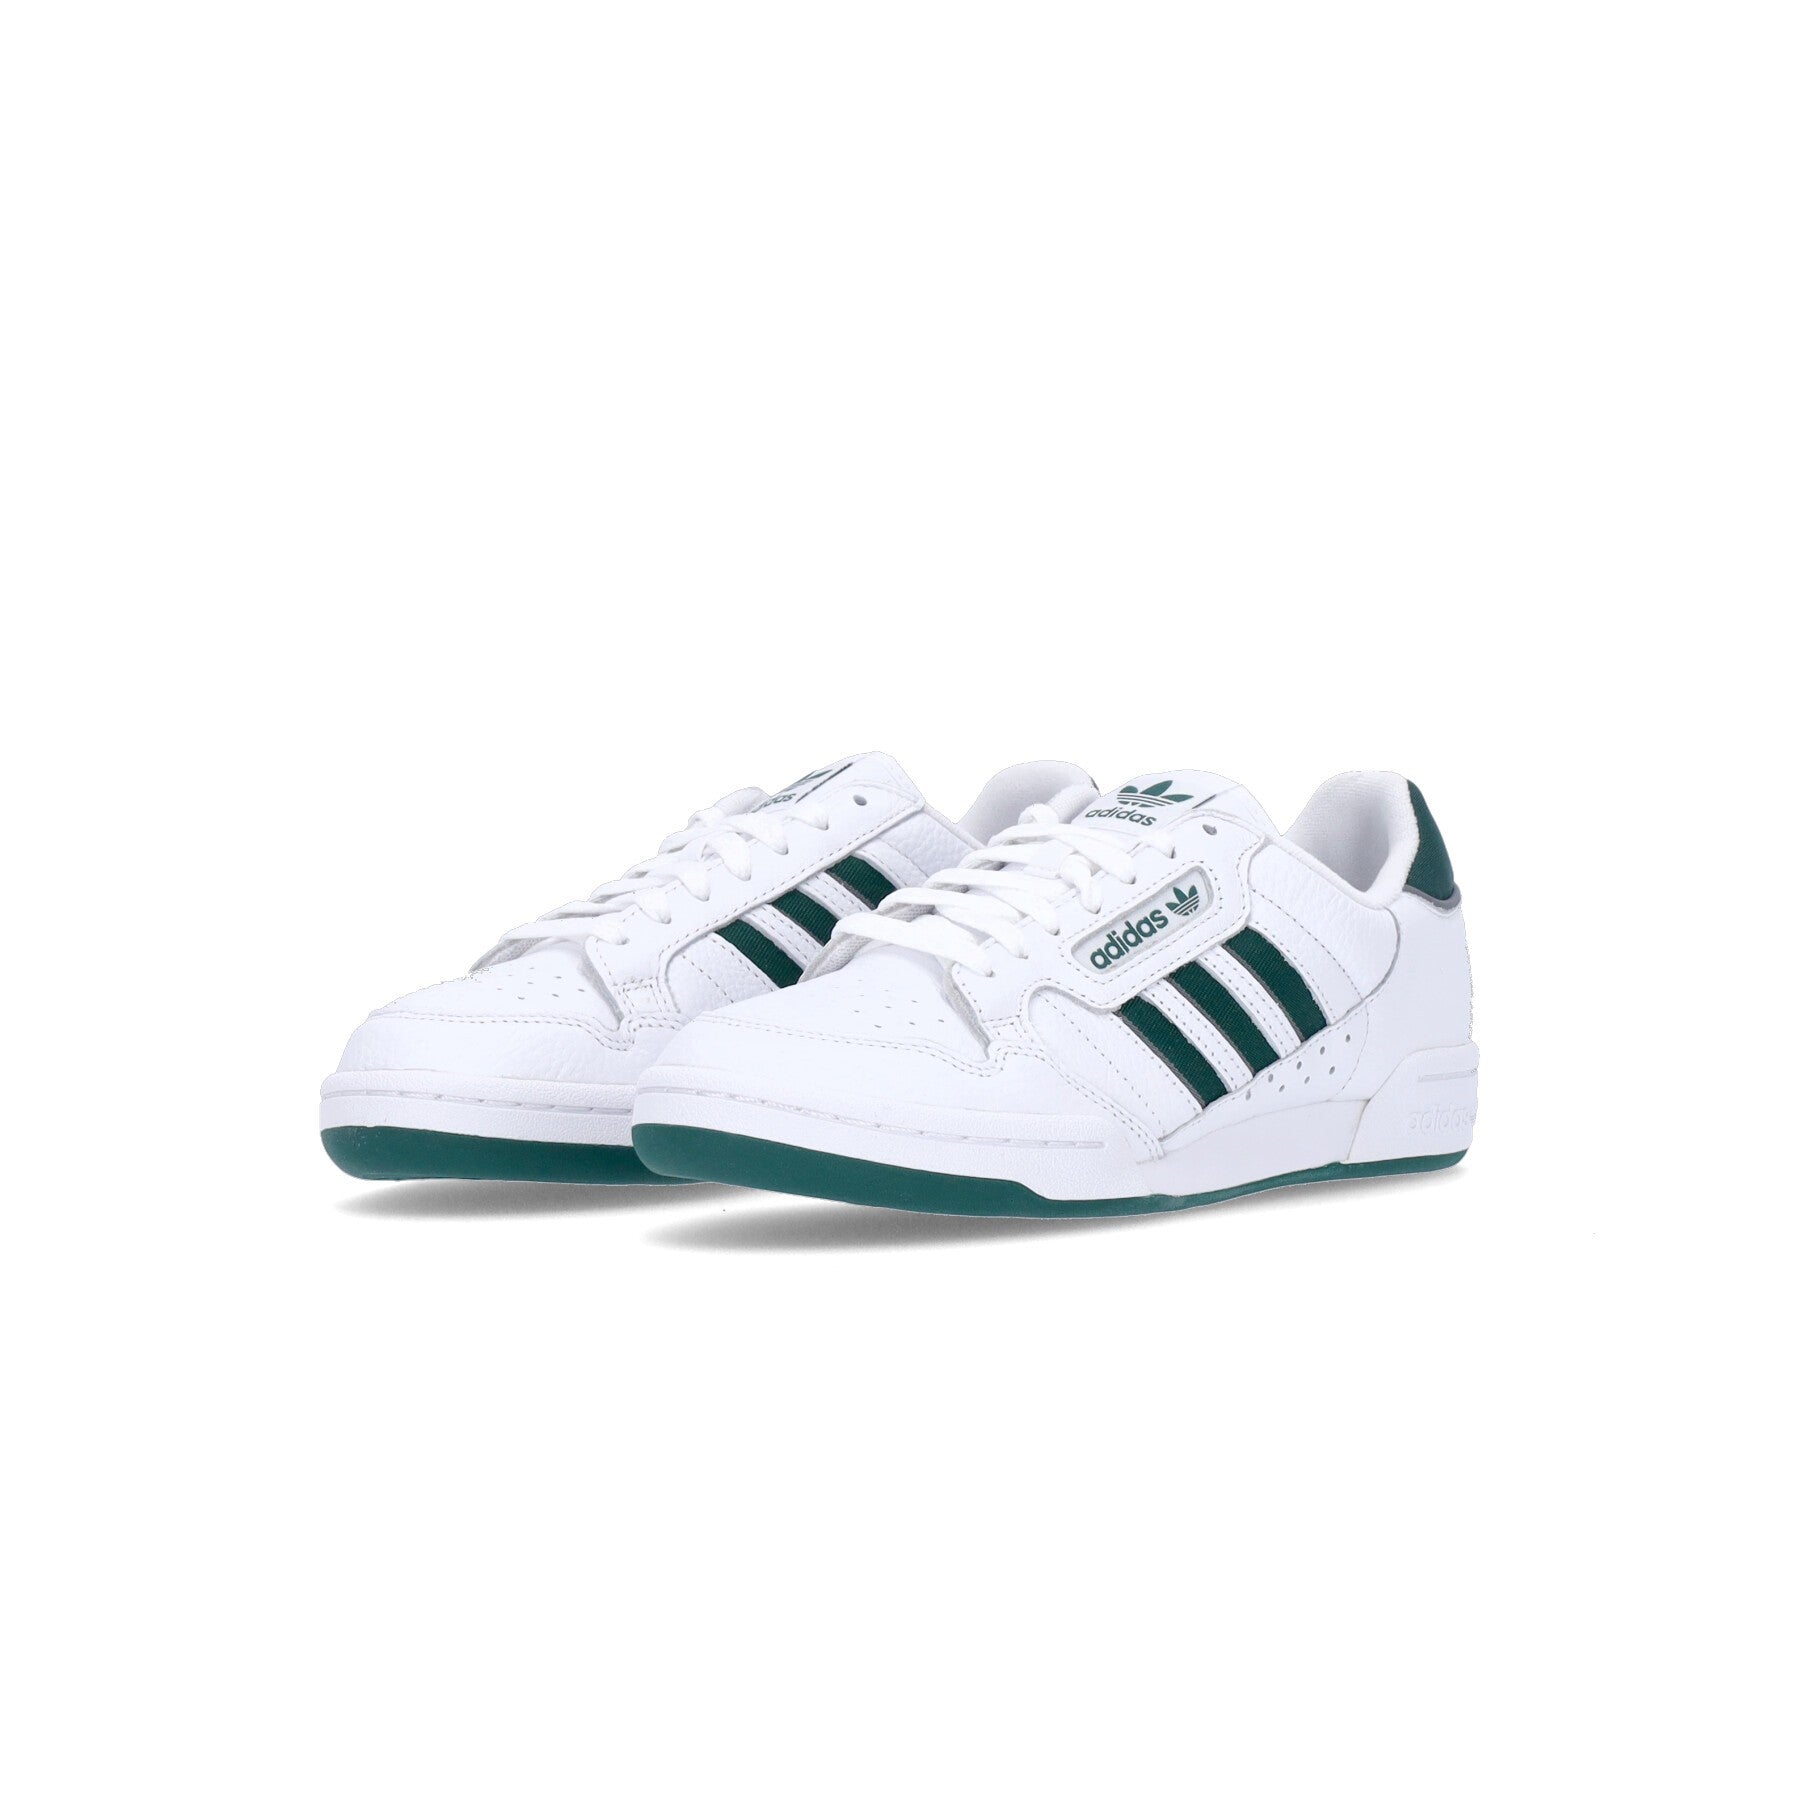 Continental 80 Stripes Cloud White/collegiate Green/grey Three Men's Low Shoe